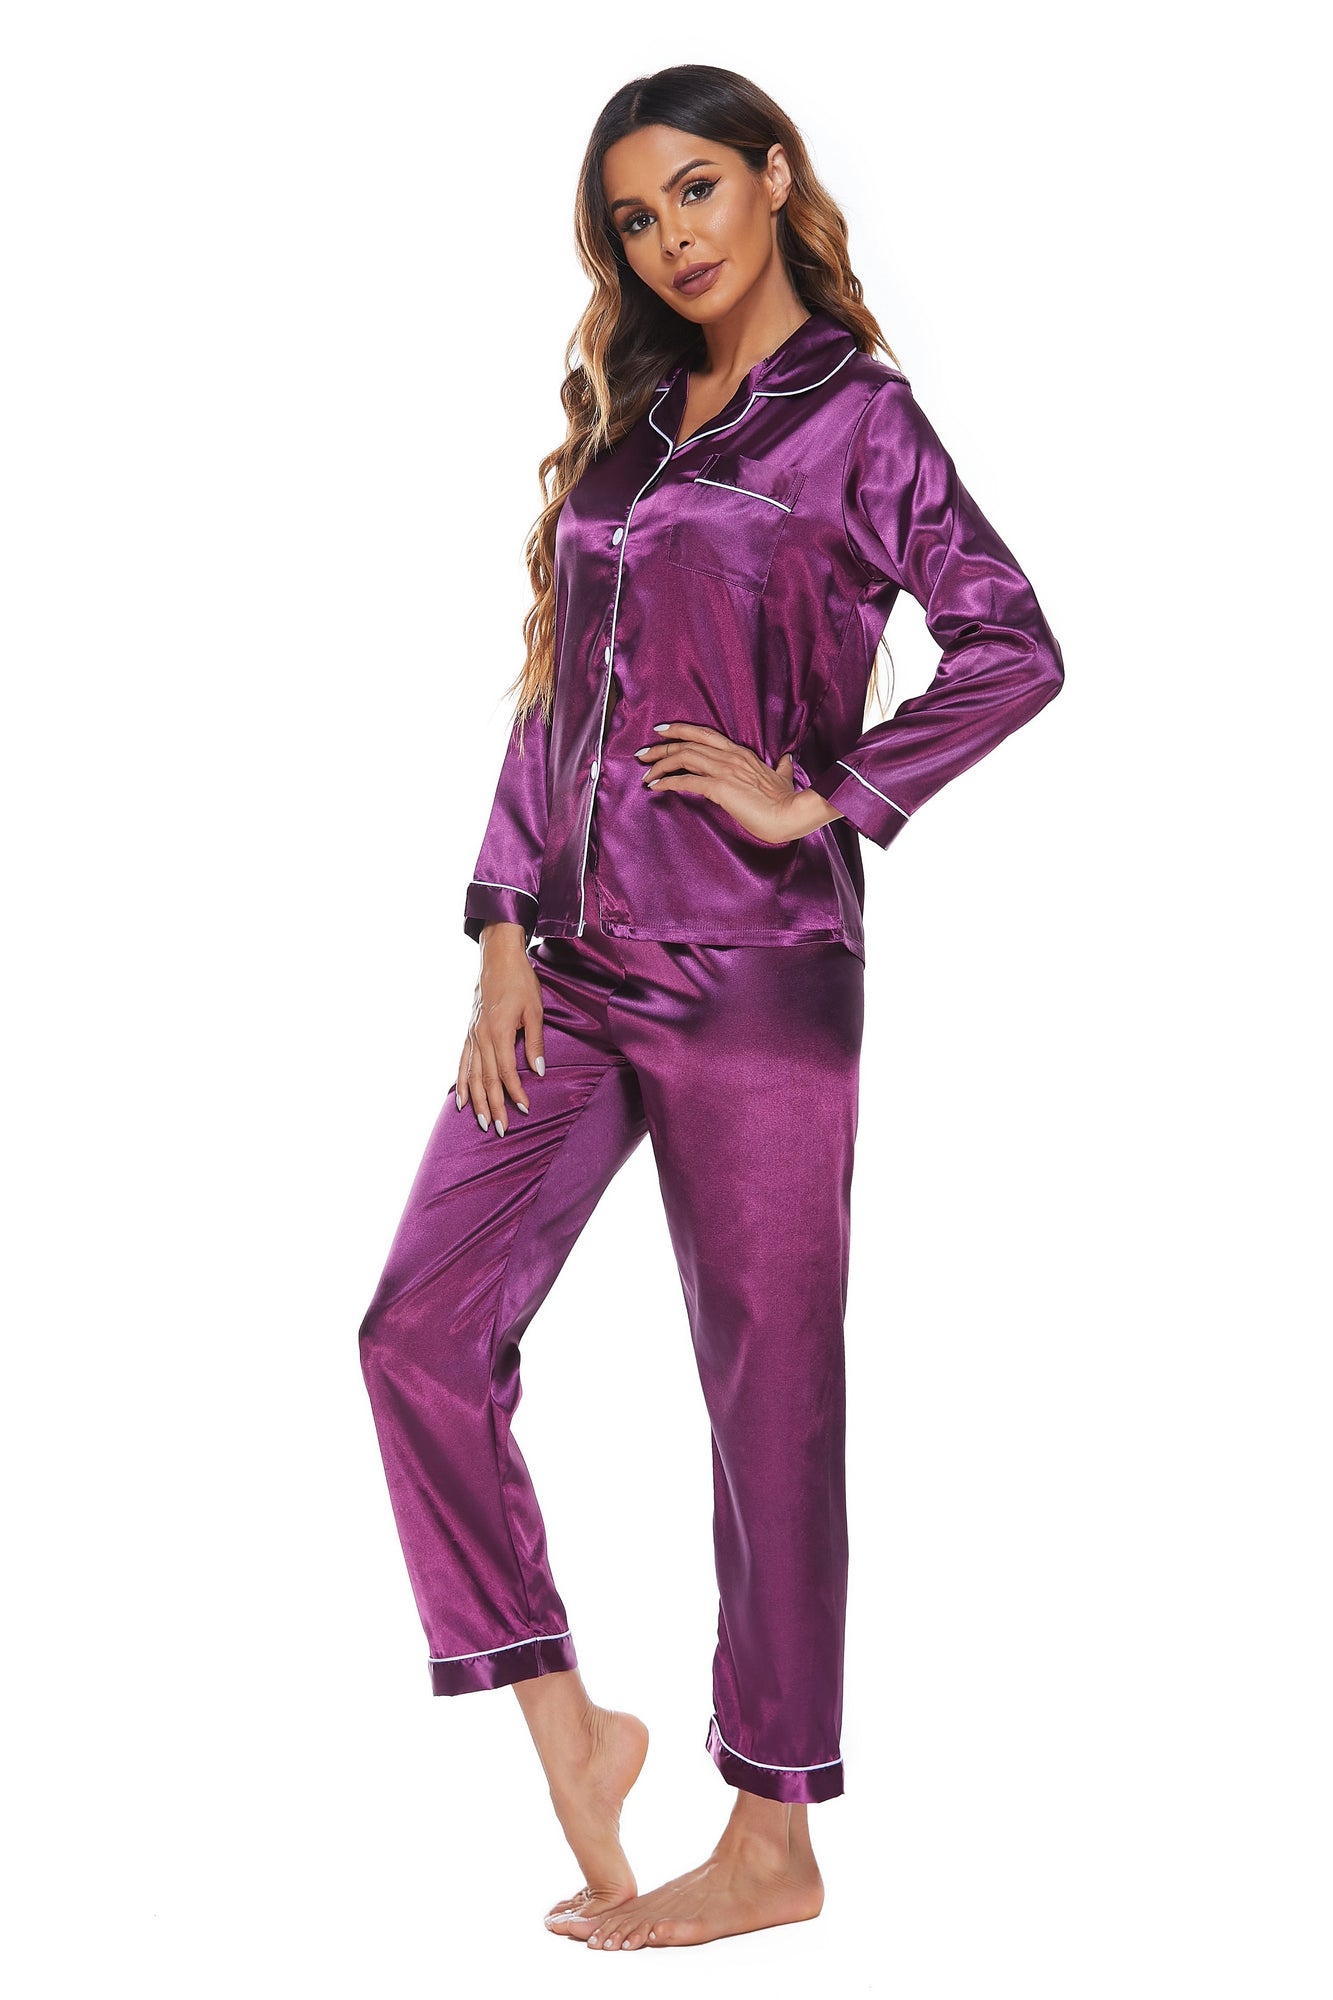 Buy Satin Pajamas Short Set for Women Nightwear from Elowel.